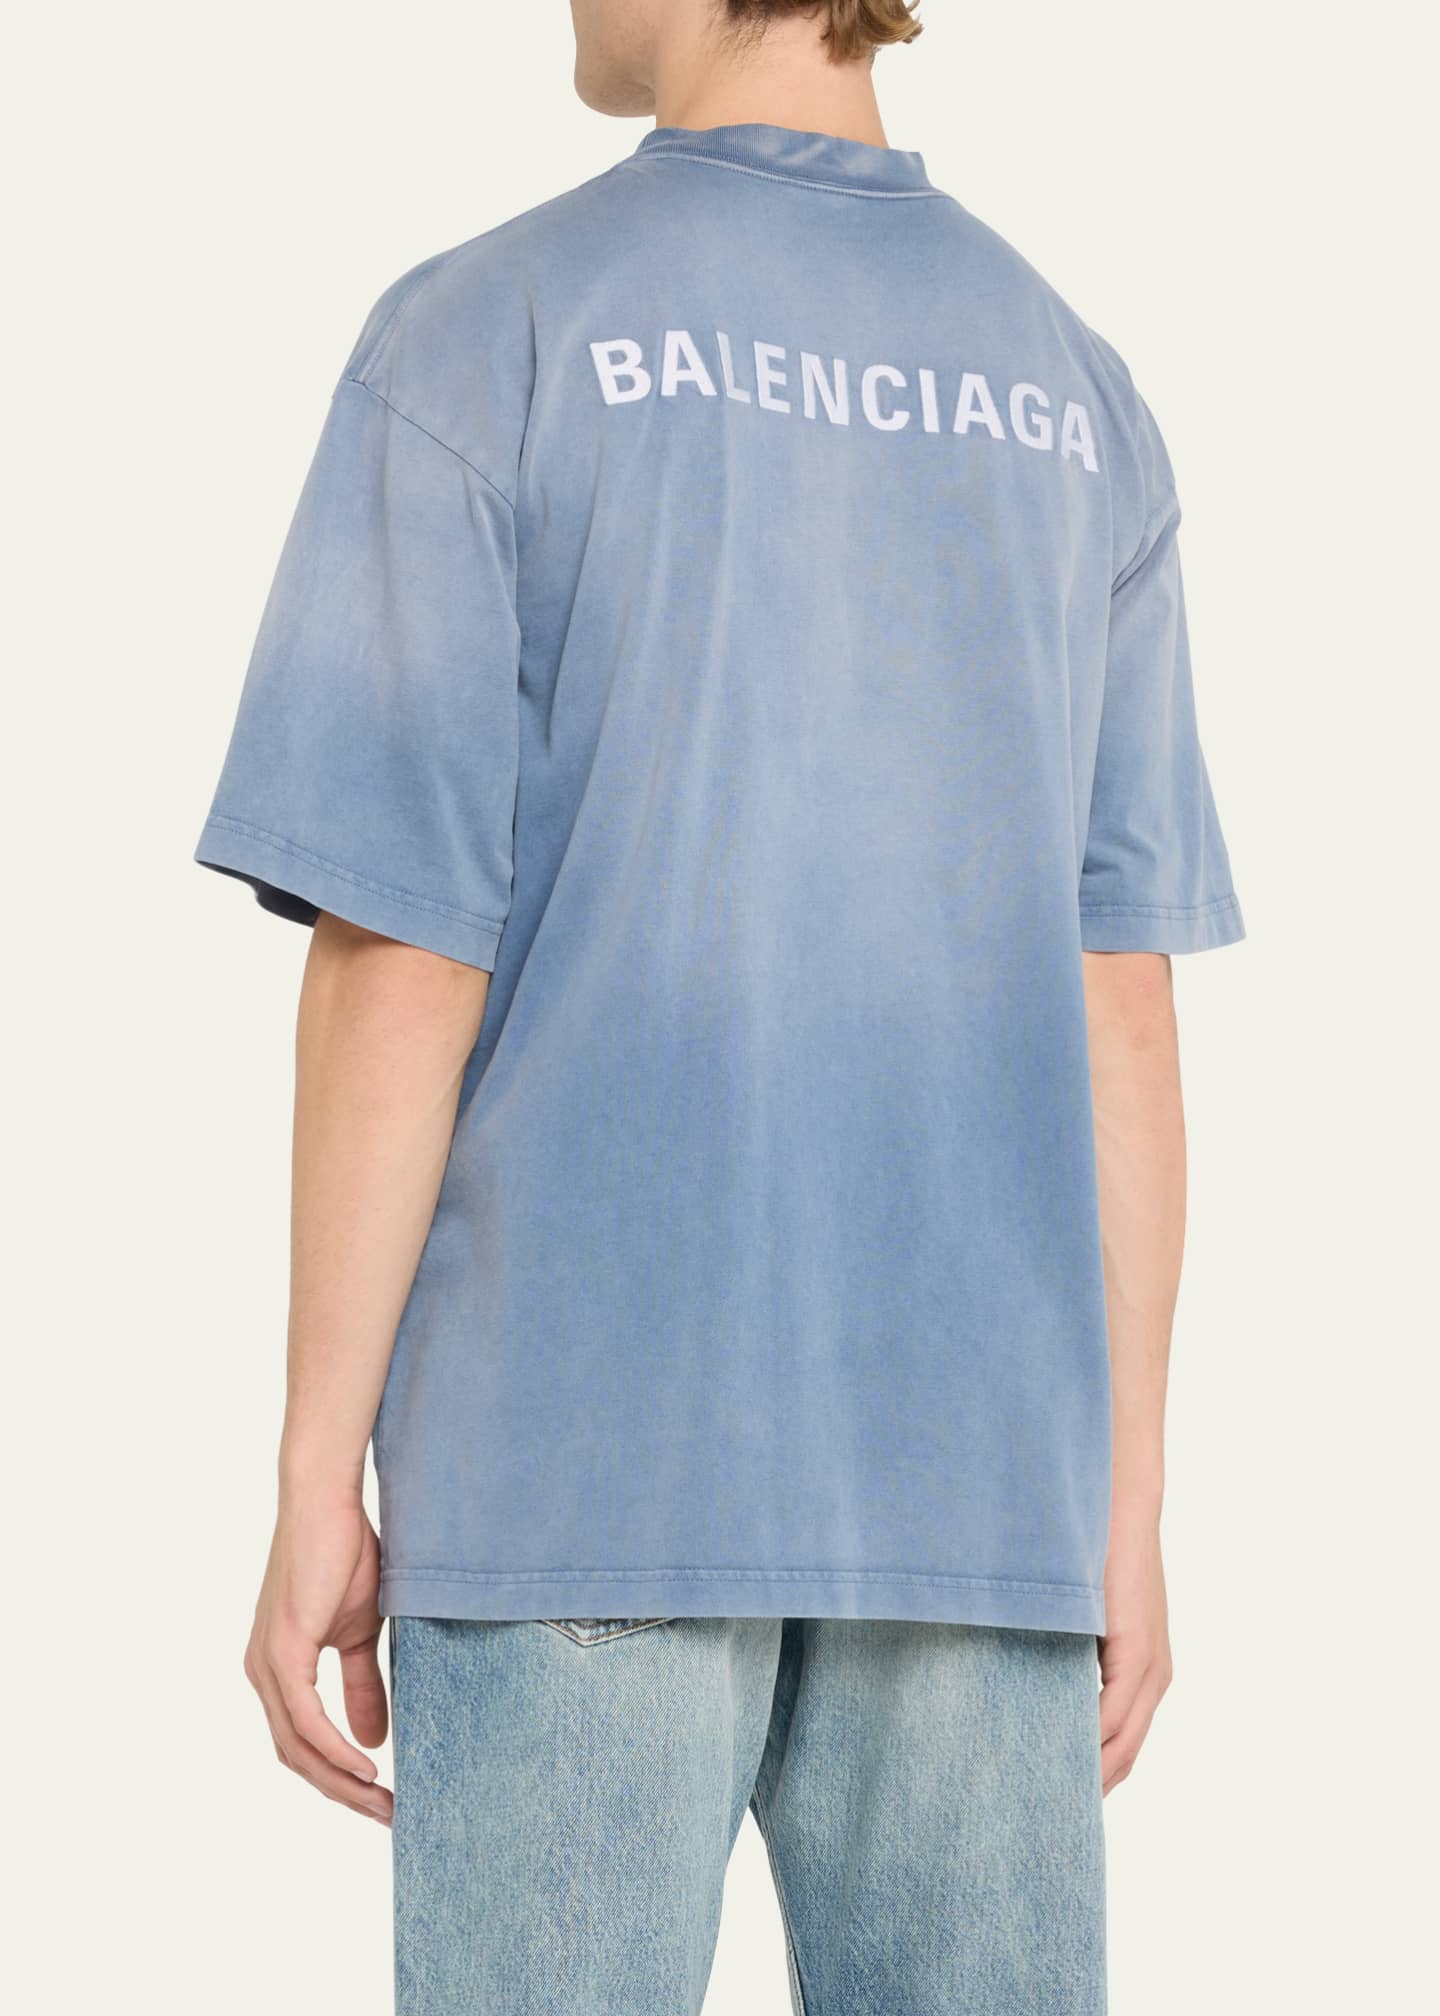 Balenciaga Men's Relaxed Logo T-Shirt - Bergdorf Goodman